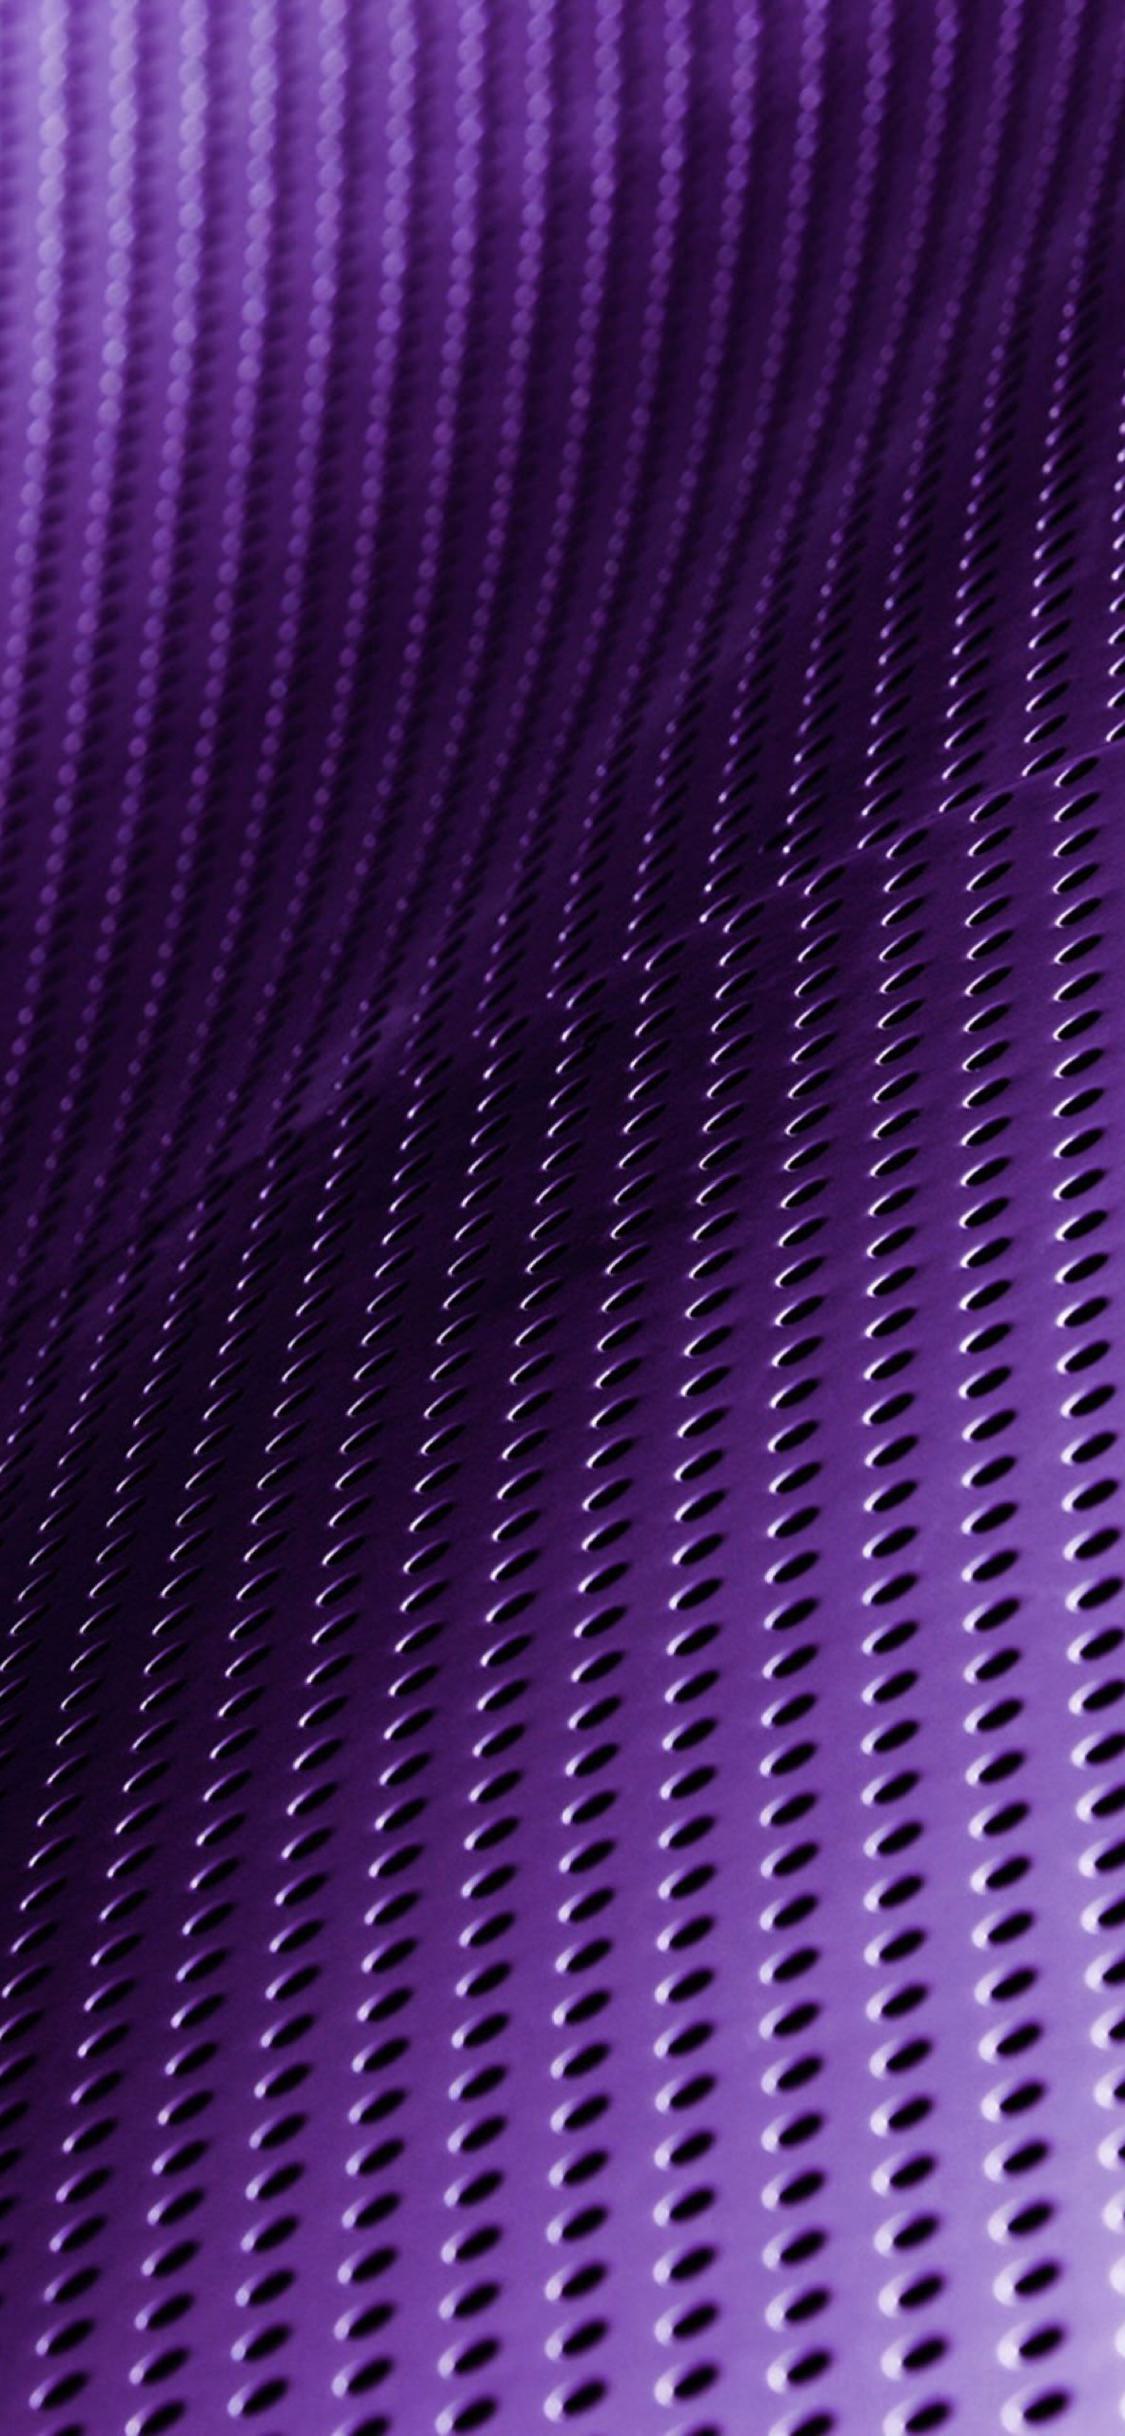 Cool purple | wallpaper.sc iPhoneXS